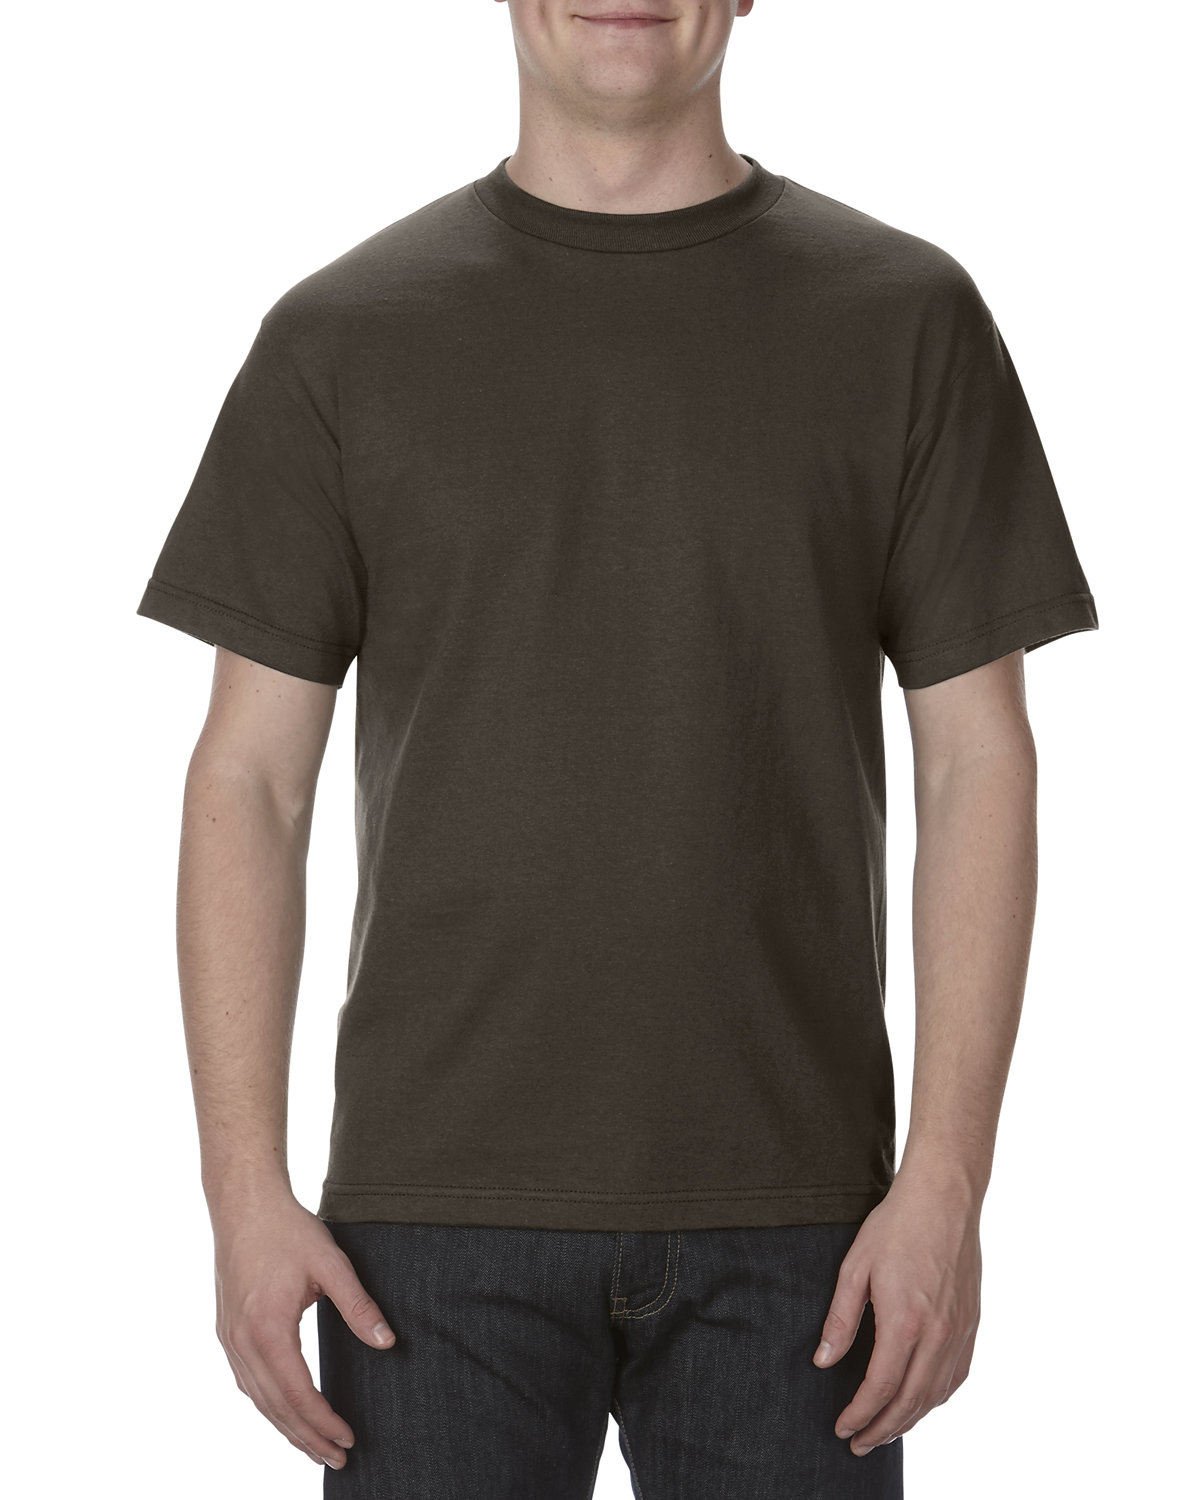 American Apparel Adult 6.0 oz., 100% Cotton T-Shirt DARK CHOCOLATE 